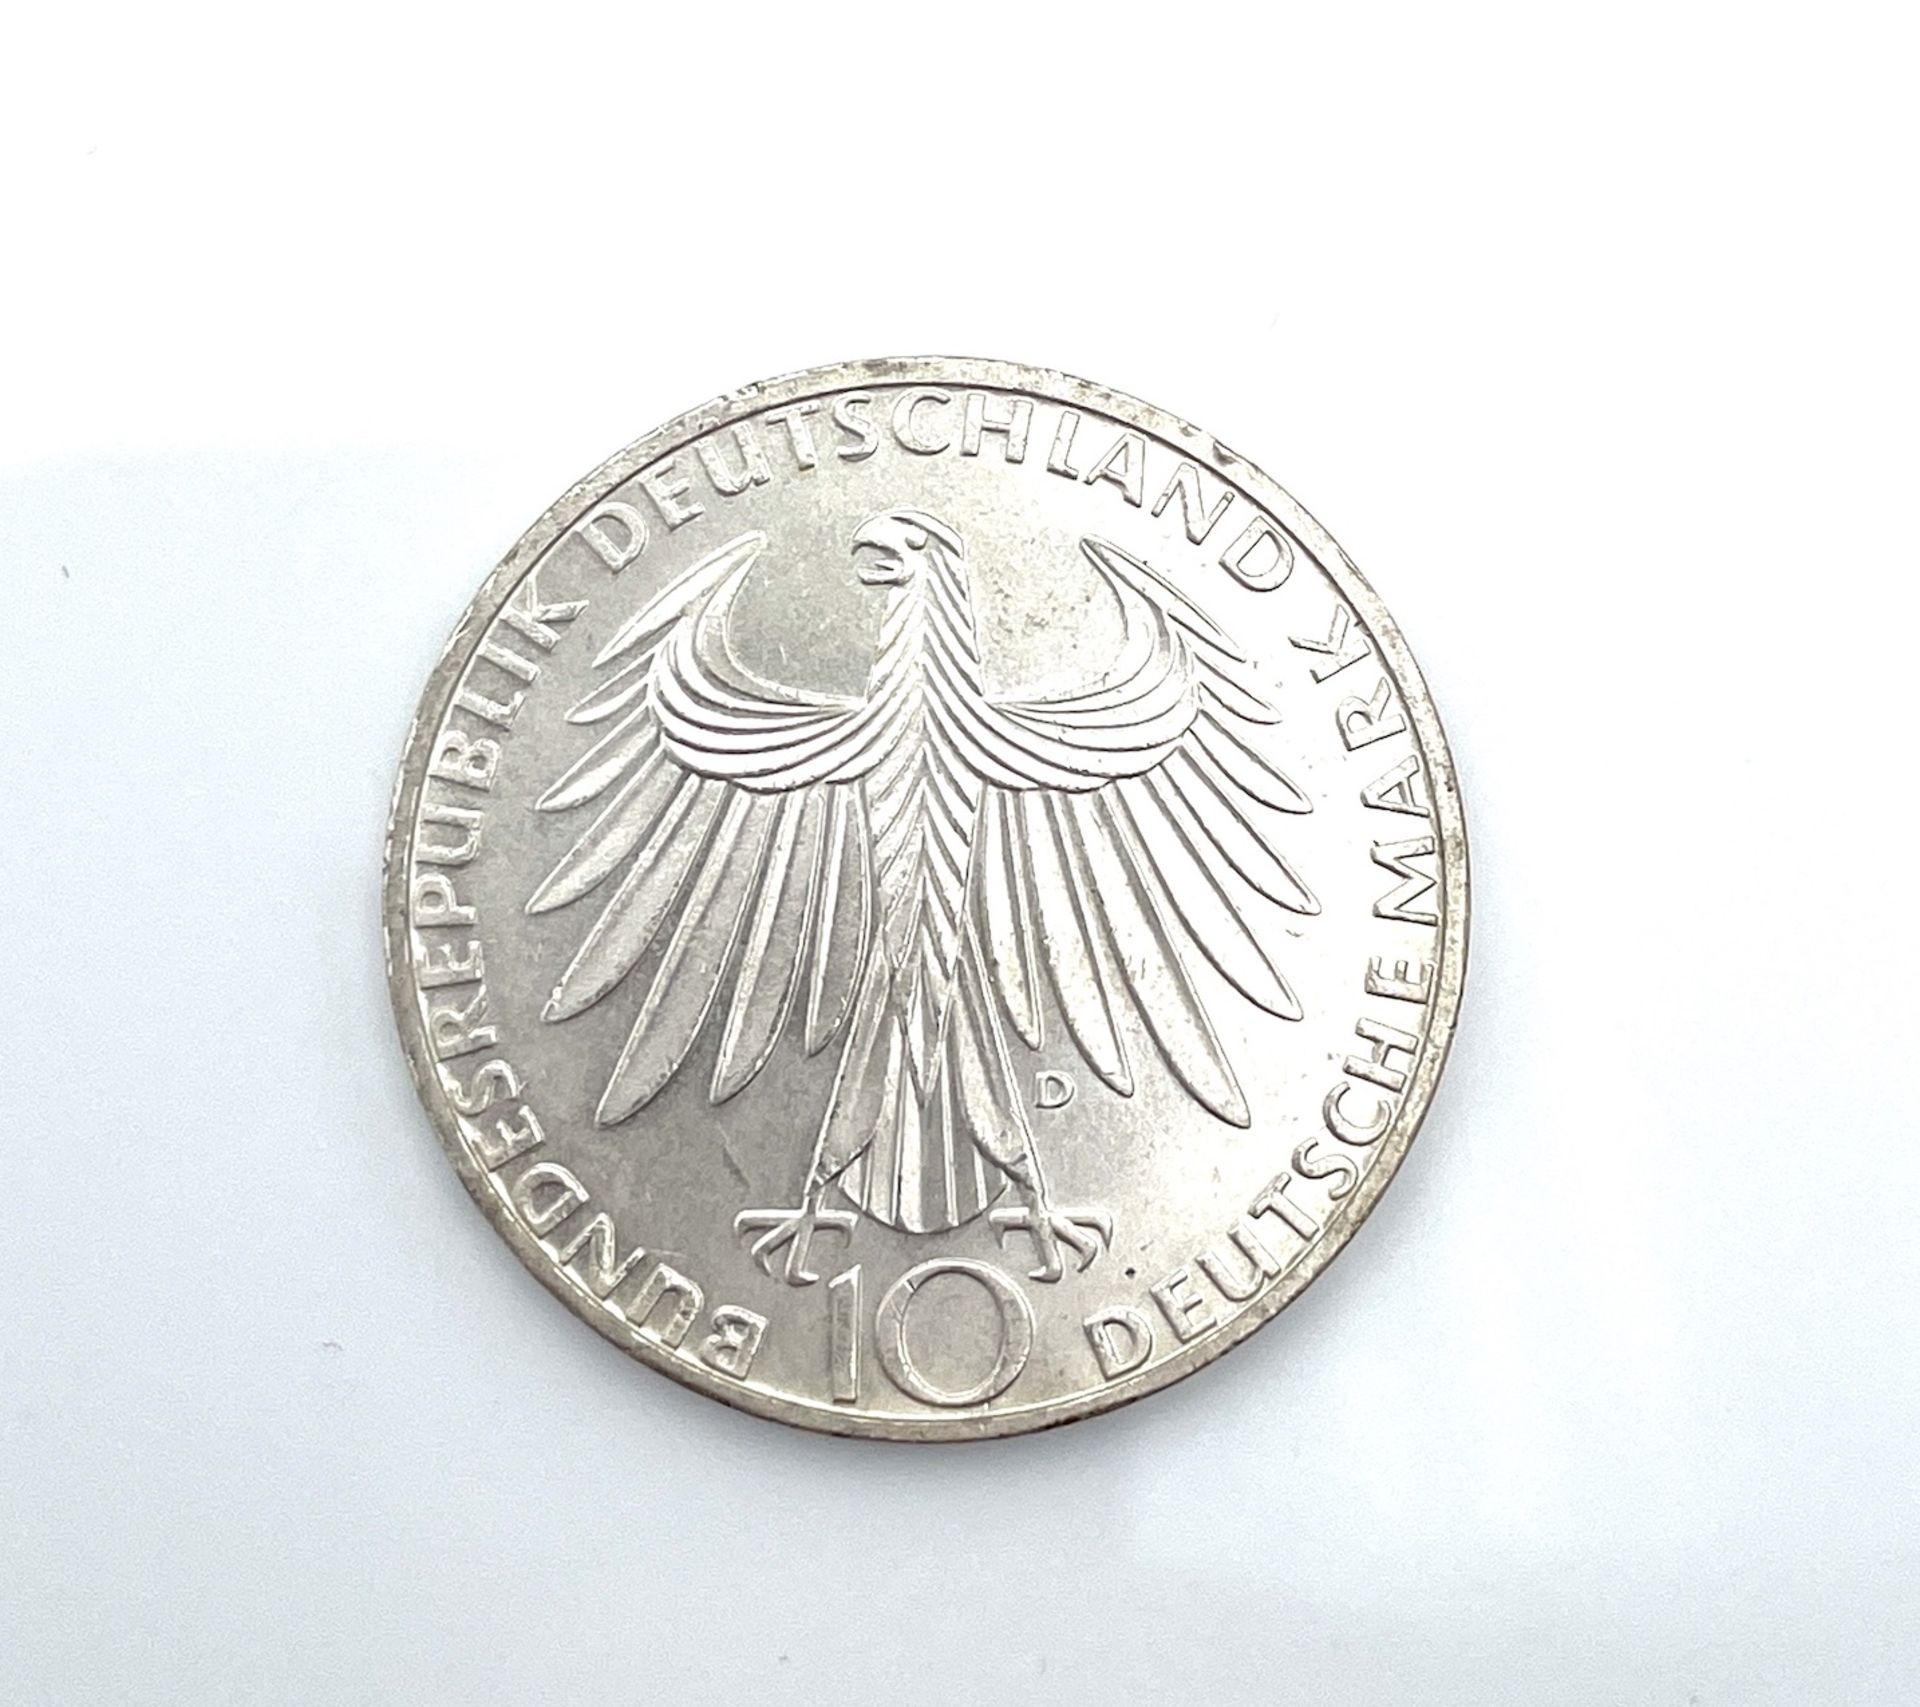 Münze, Silber, 10 DM, Olymiade 1972 in München, 15,5g